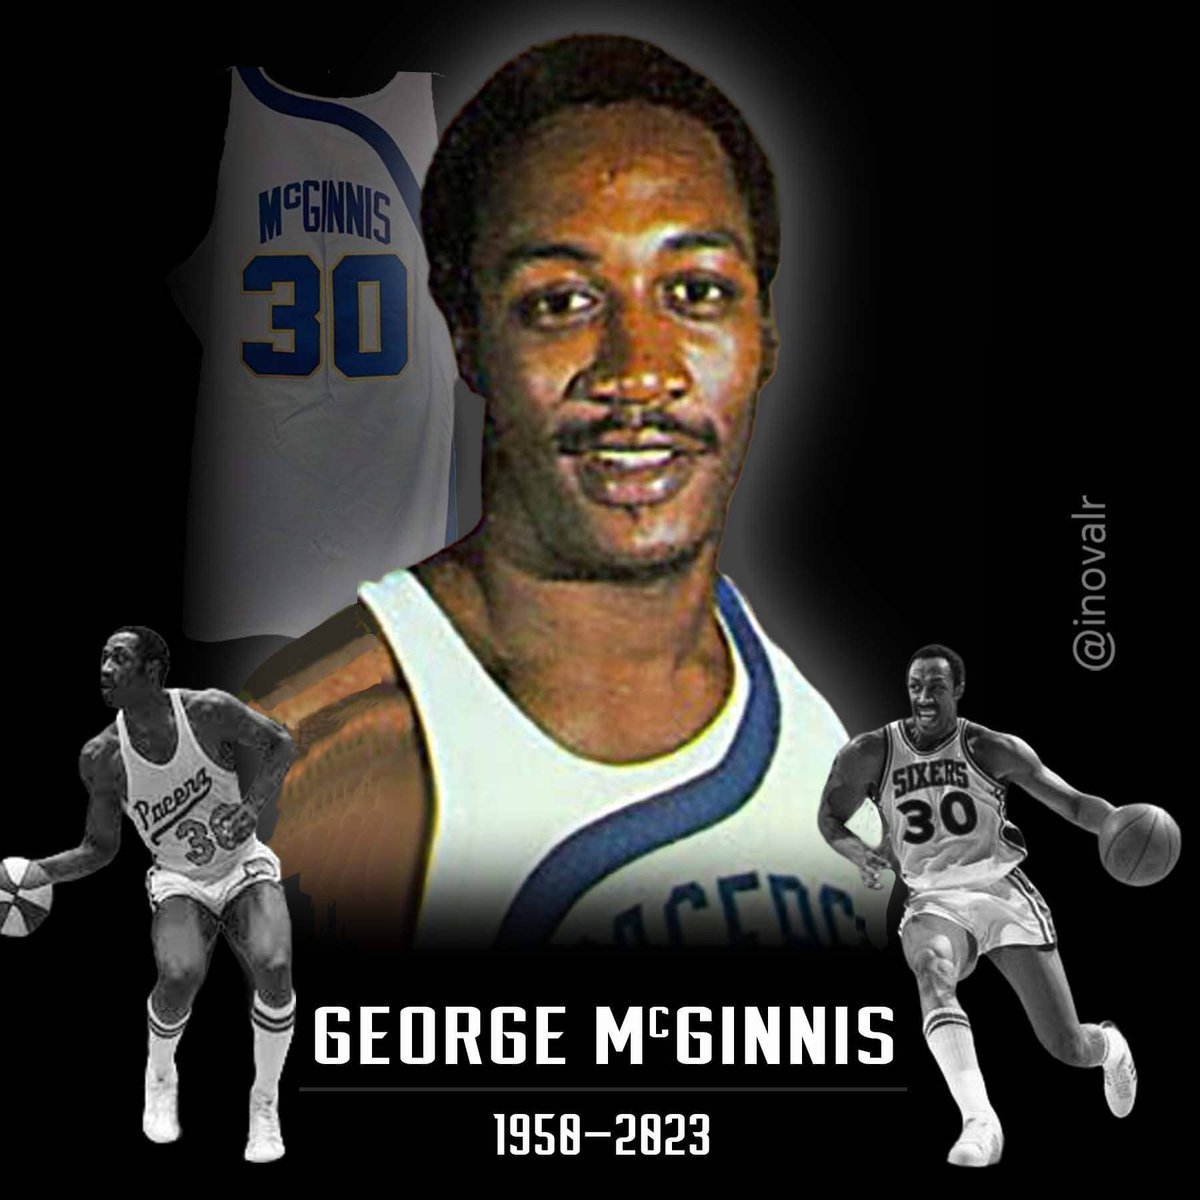 Rest in Peace Big Mac #️⃣3️⃣0️⃣ 😔.
George McGinnis @HOFMcGinnis30 🇺🇸 1950-2023 #DEP #RIP 🙏

#GeorgeWashingtonHS @IndianaMBB @Pacers @sixers @nuggets @NBA @NBAHistory @NBAalumni @Hoophall #ncaa #NBRPA